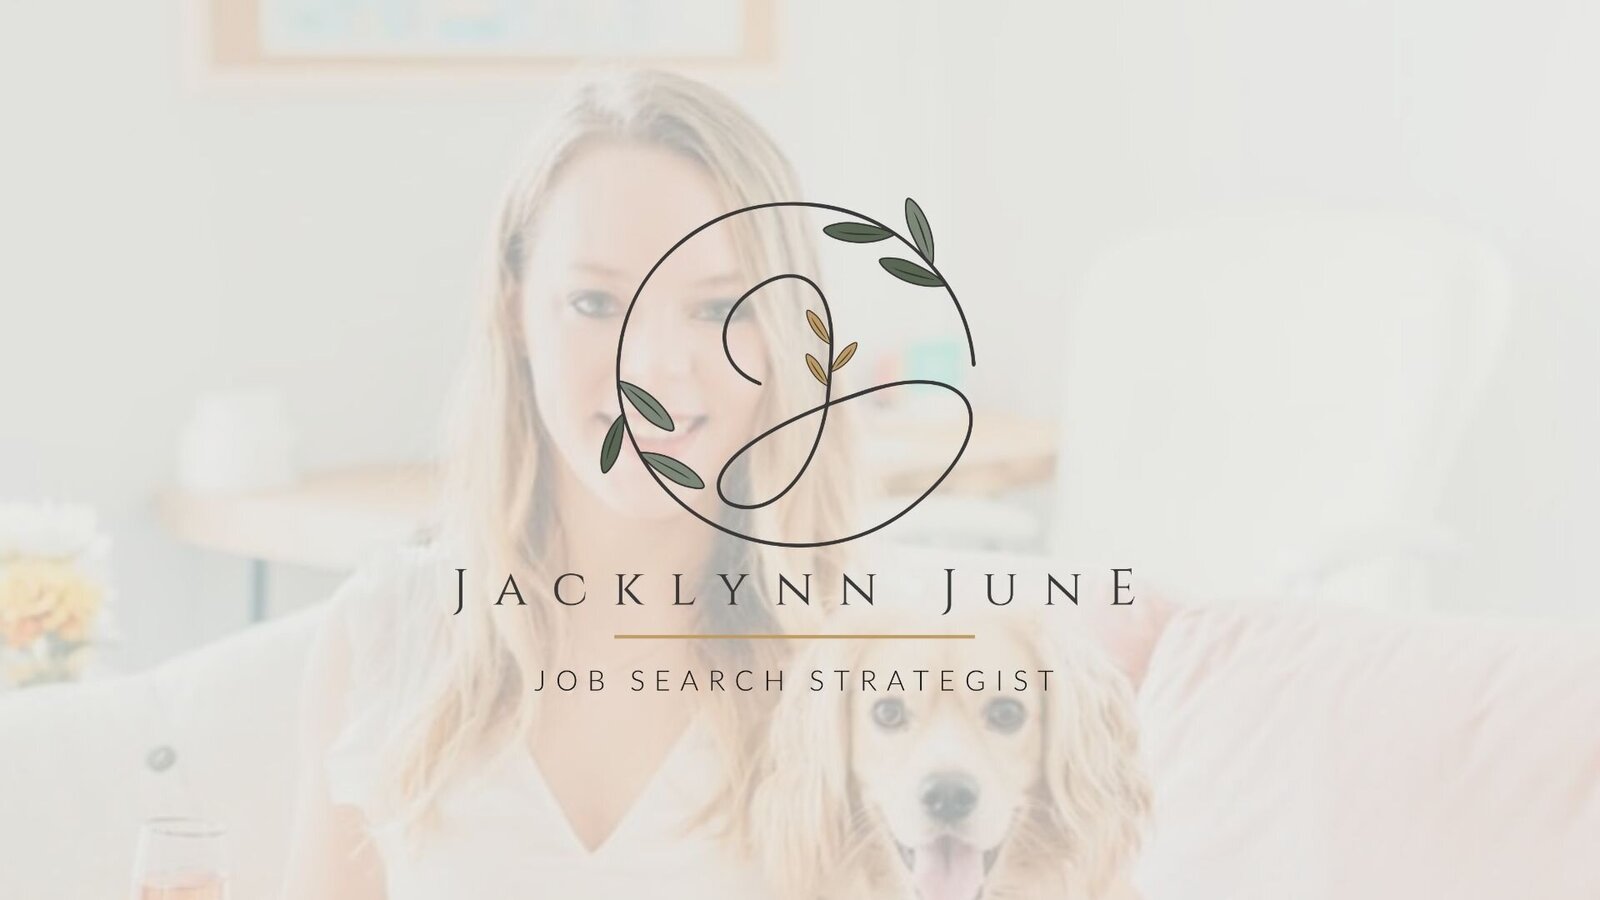 Jacklynn June Job SearchStrategist Branding Overview